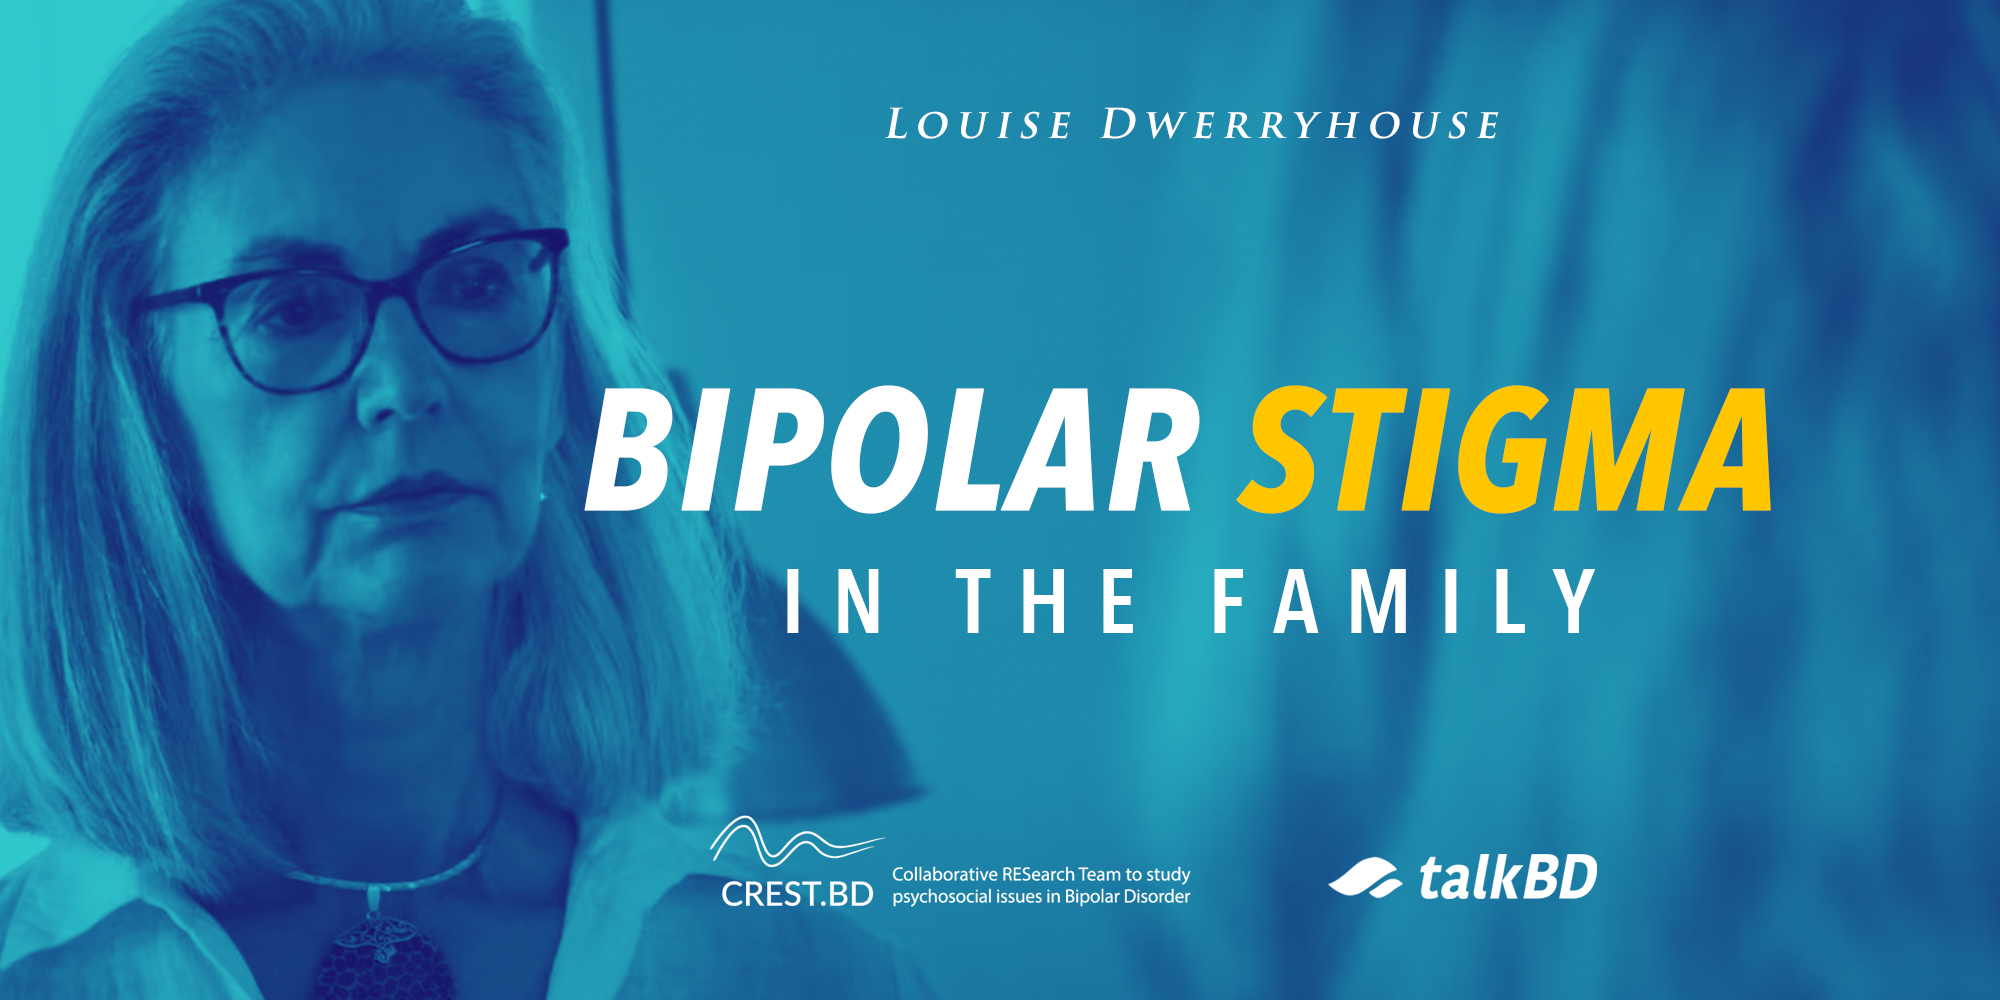 Stigma in the Family and Bipolar Disorder